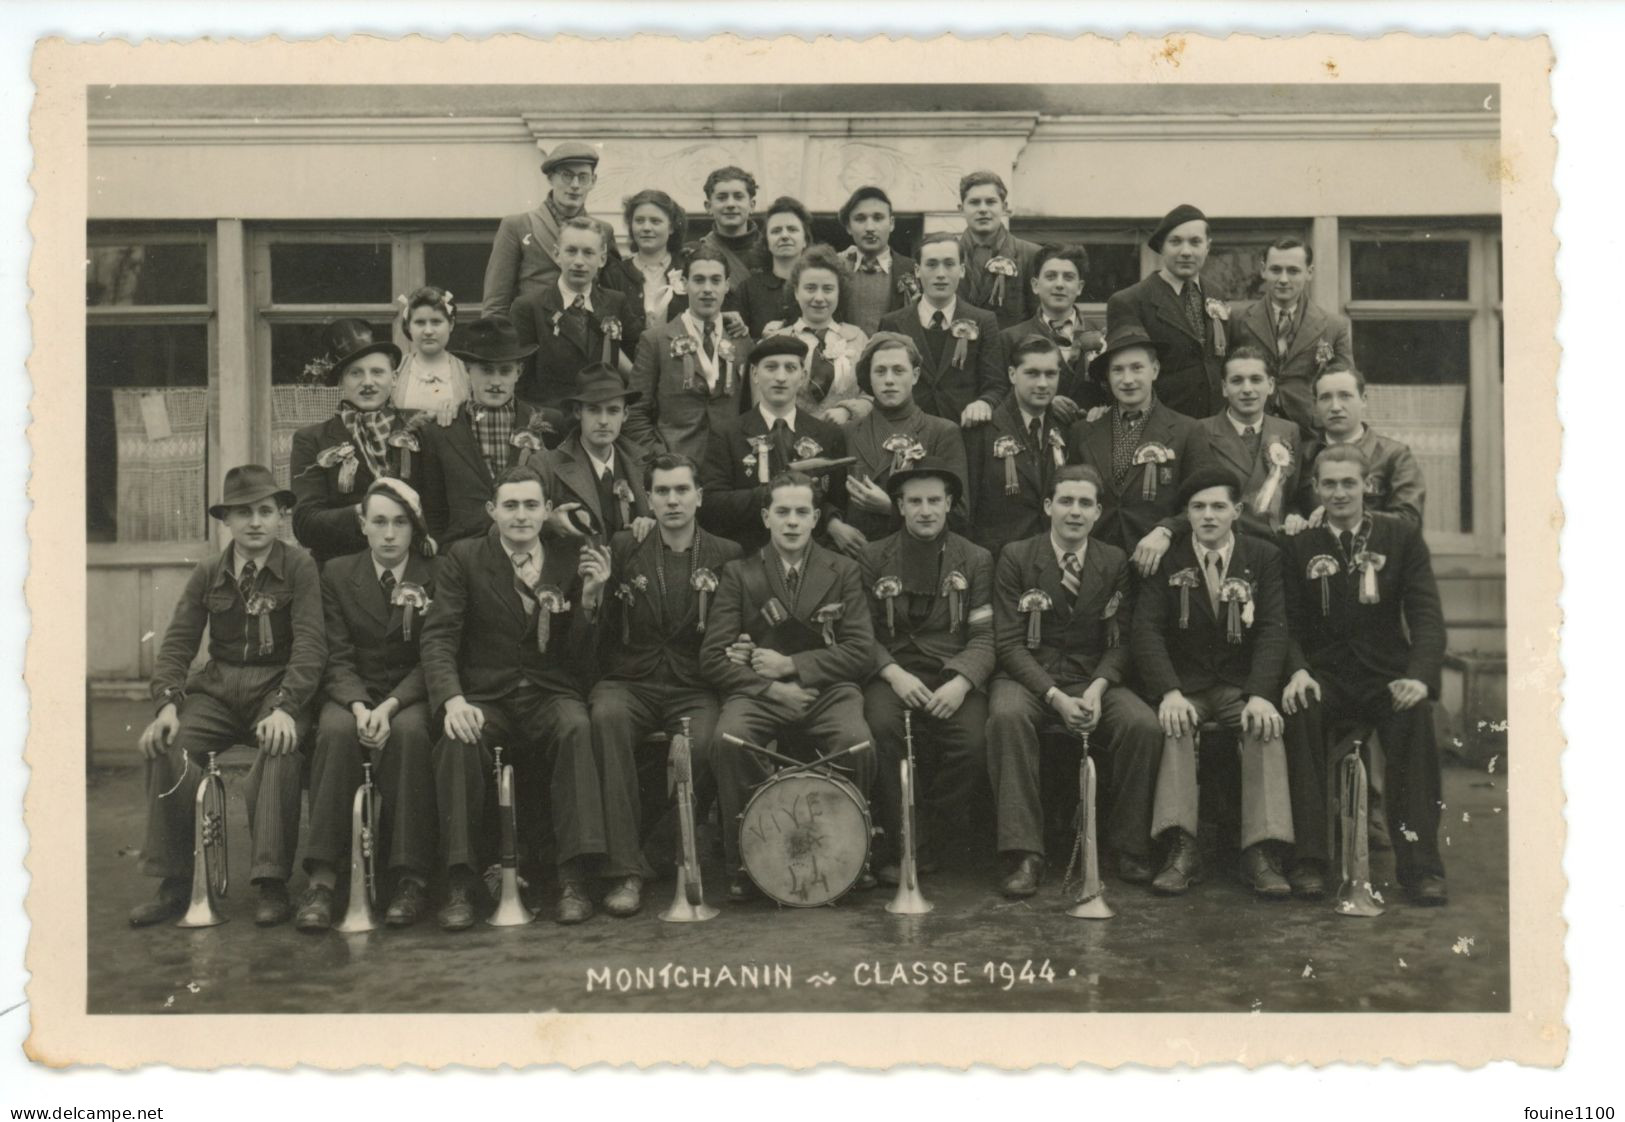 PHOTO Au Format 15,8 X 10,5 Cm MONTCHANIN Classe 1944 ( Conscrits ) Photographe ROBILLARD - Non Classificati